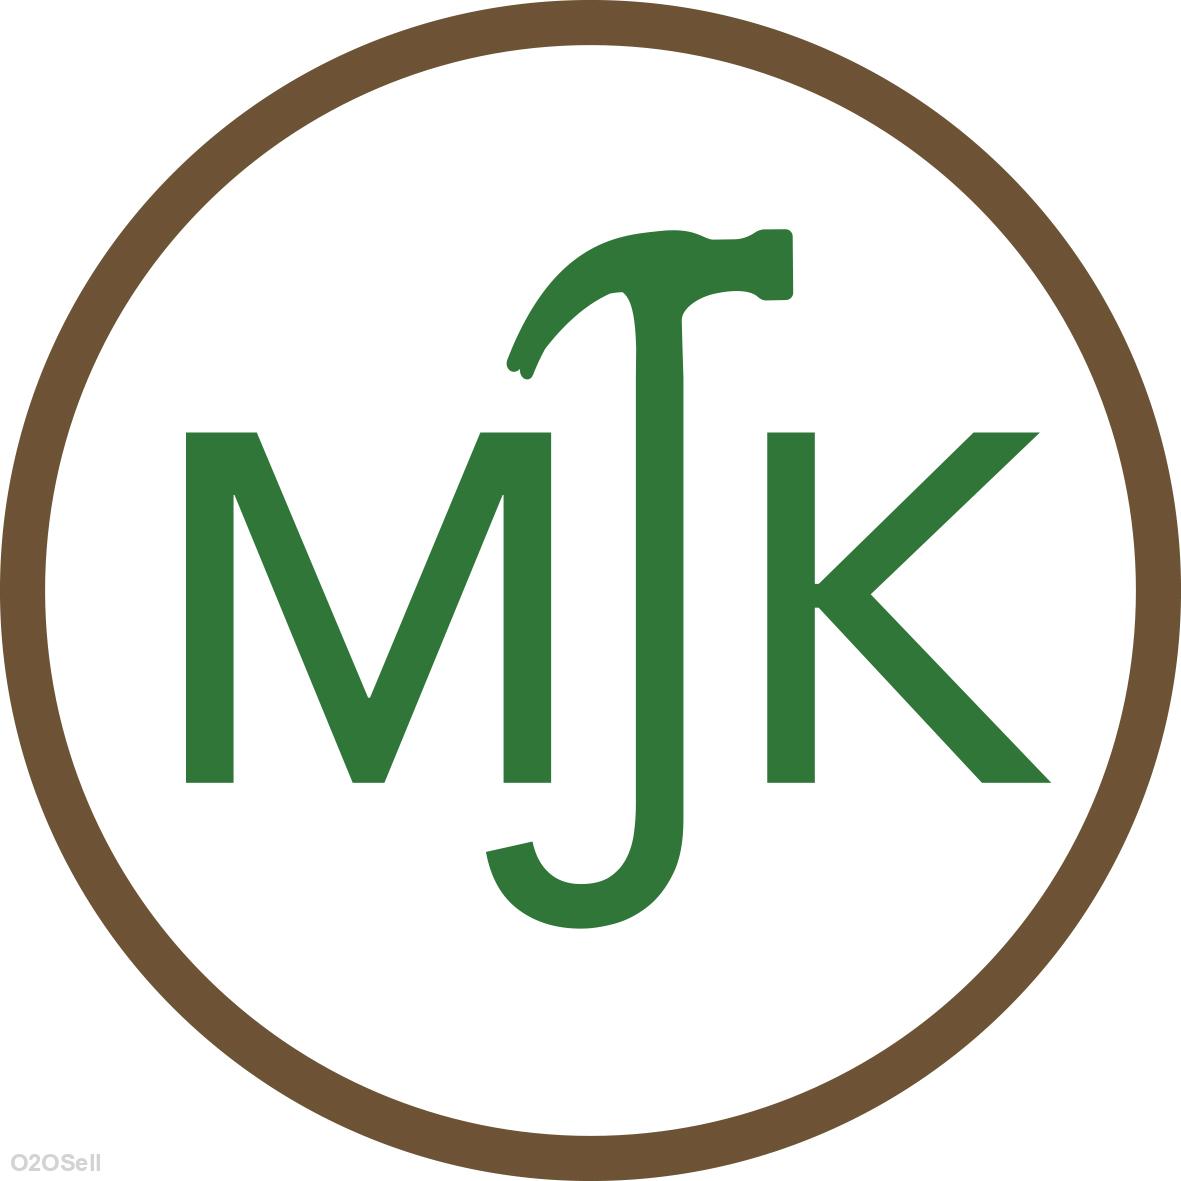 MJ Kloss Carpentry & Joinery - Profile Image